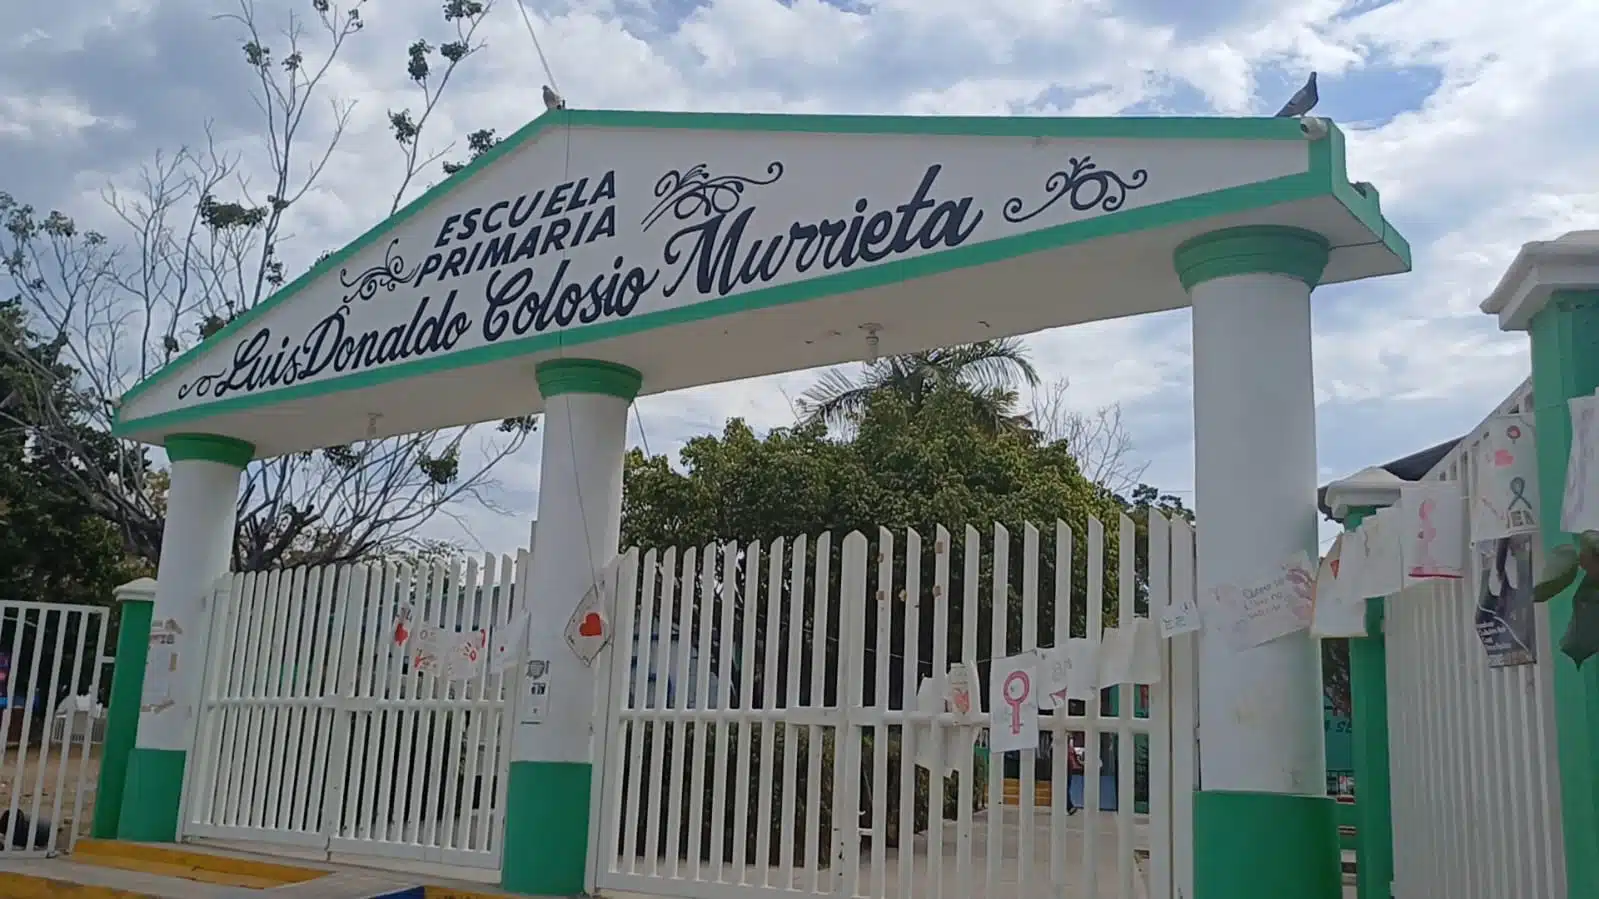 Escuela Primaria Luis Donaldo Colosio Murrieta de Mazatlán